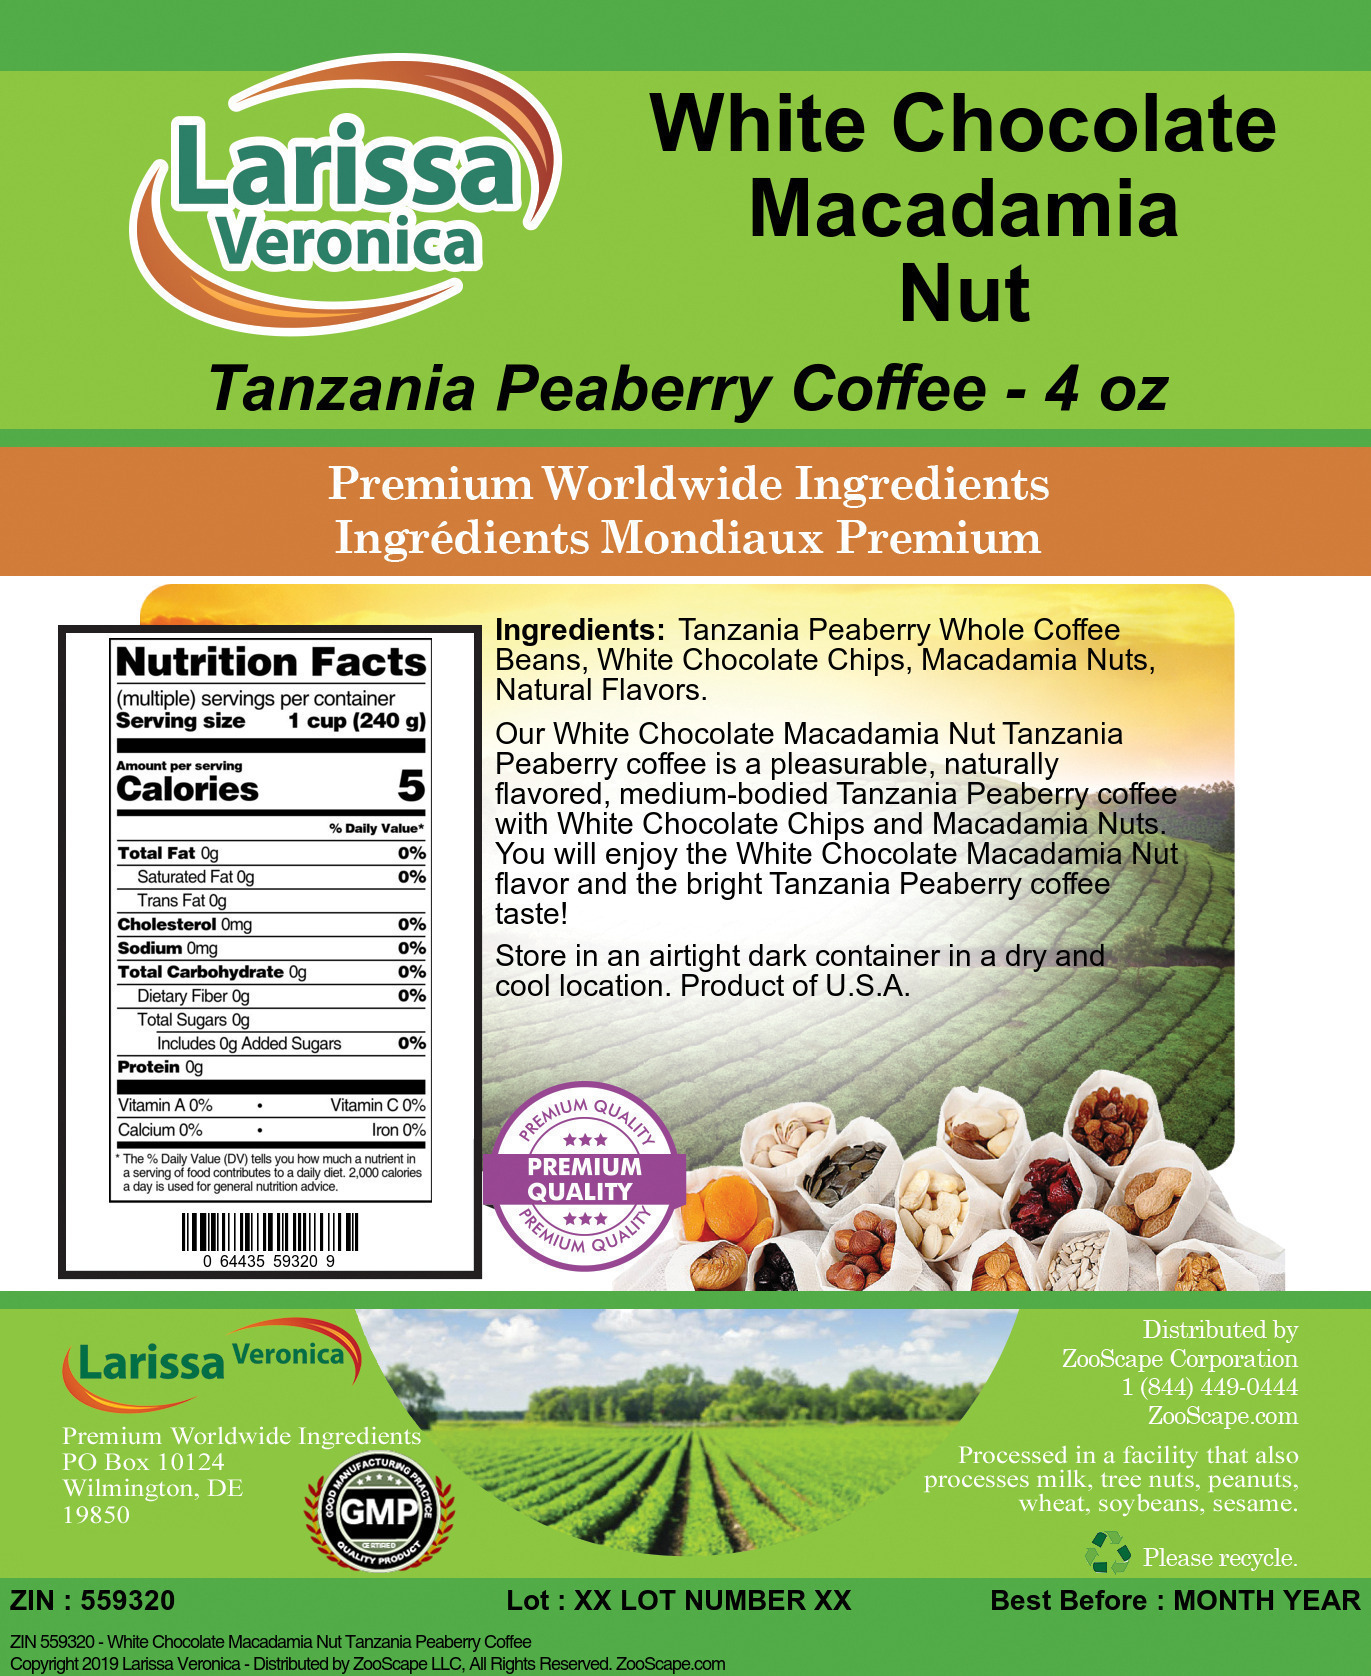 White Chocolate Macadamia Nut Tanzania Peaberry Coffee - Label